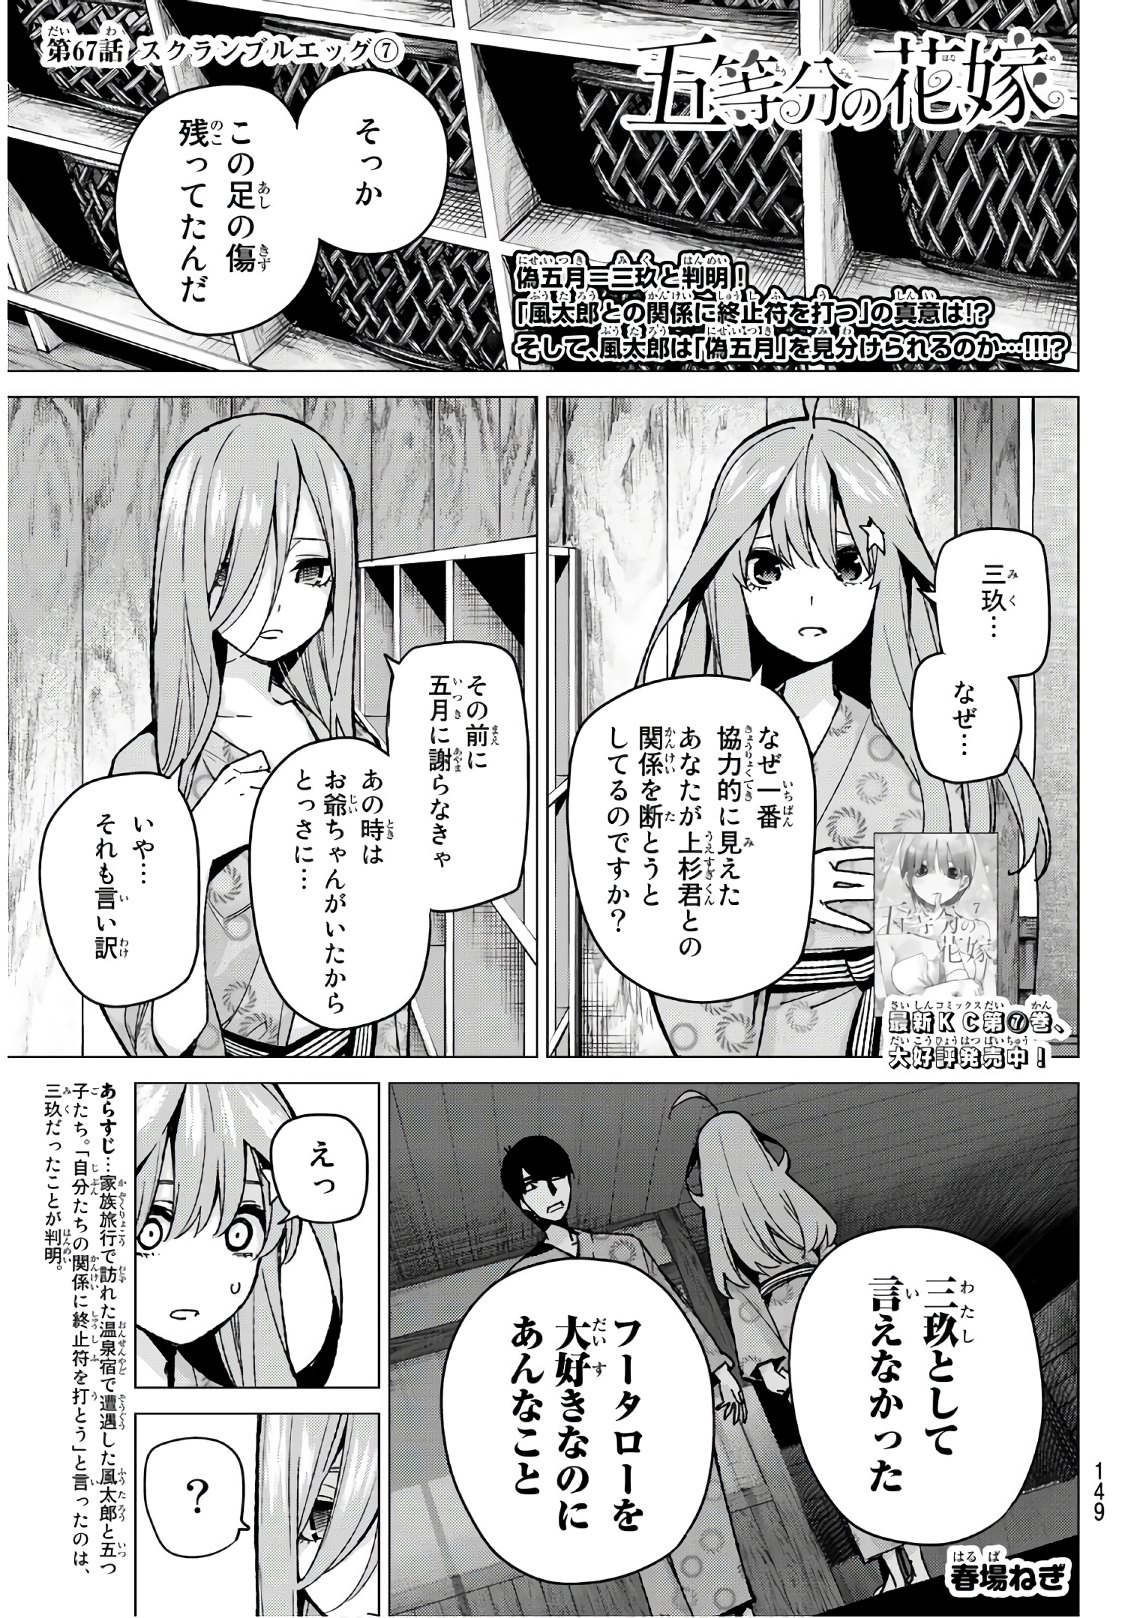 Read 5Toubun No Hanayome - I Woke Up And The Quintuplets Were Acting Strange  (Doujinshi) 5 - Oni Scan